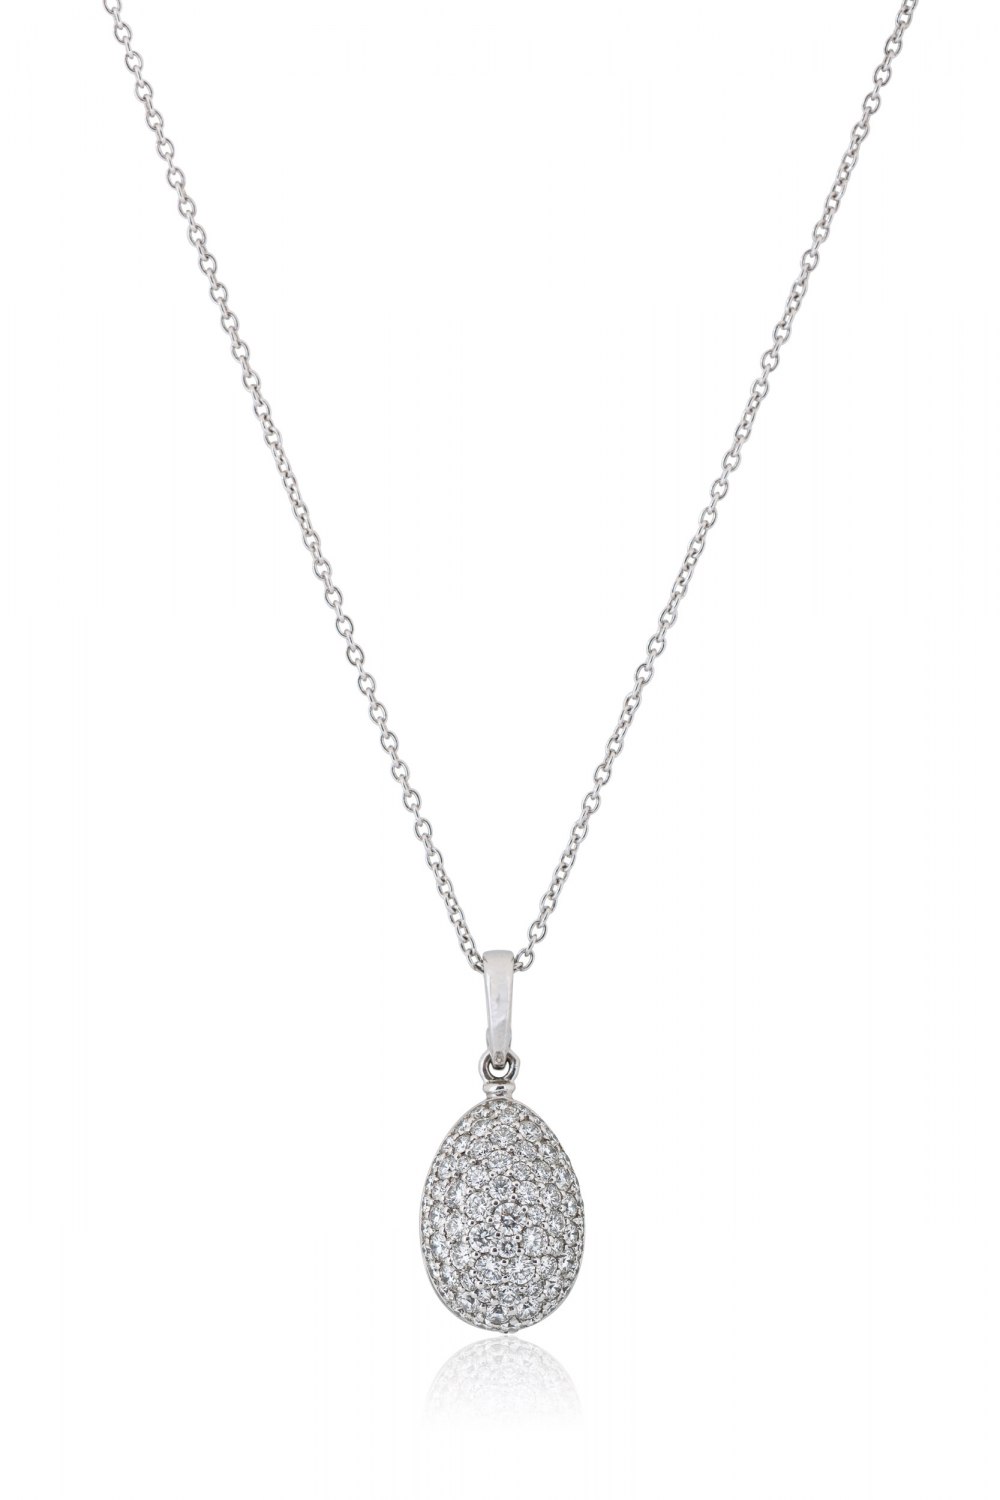 FABERGE - Diamond Royal Blue Egg Pendant Necklace